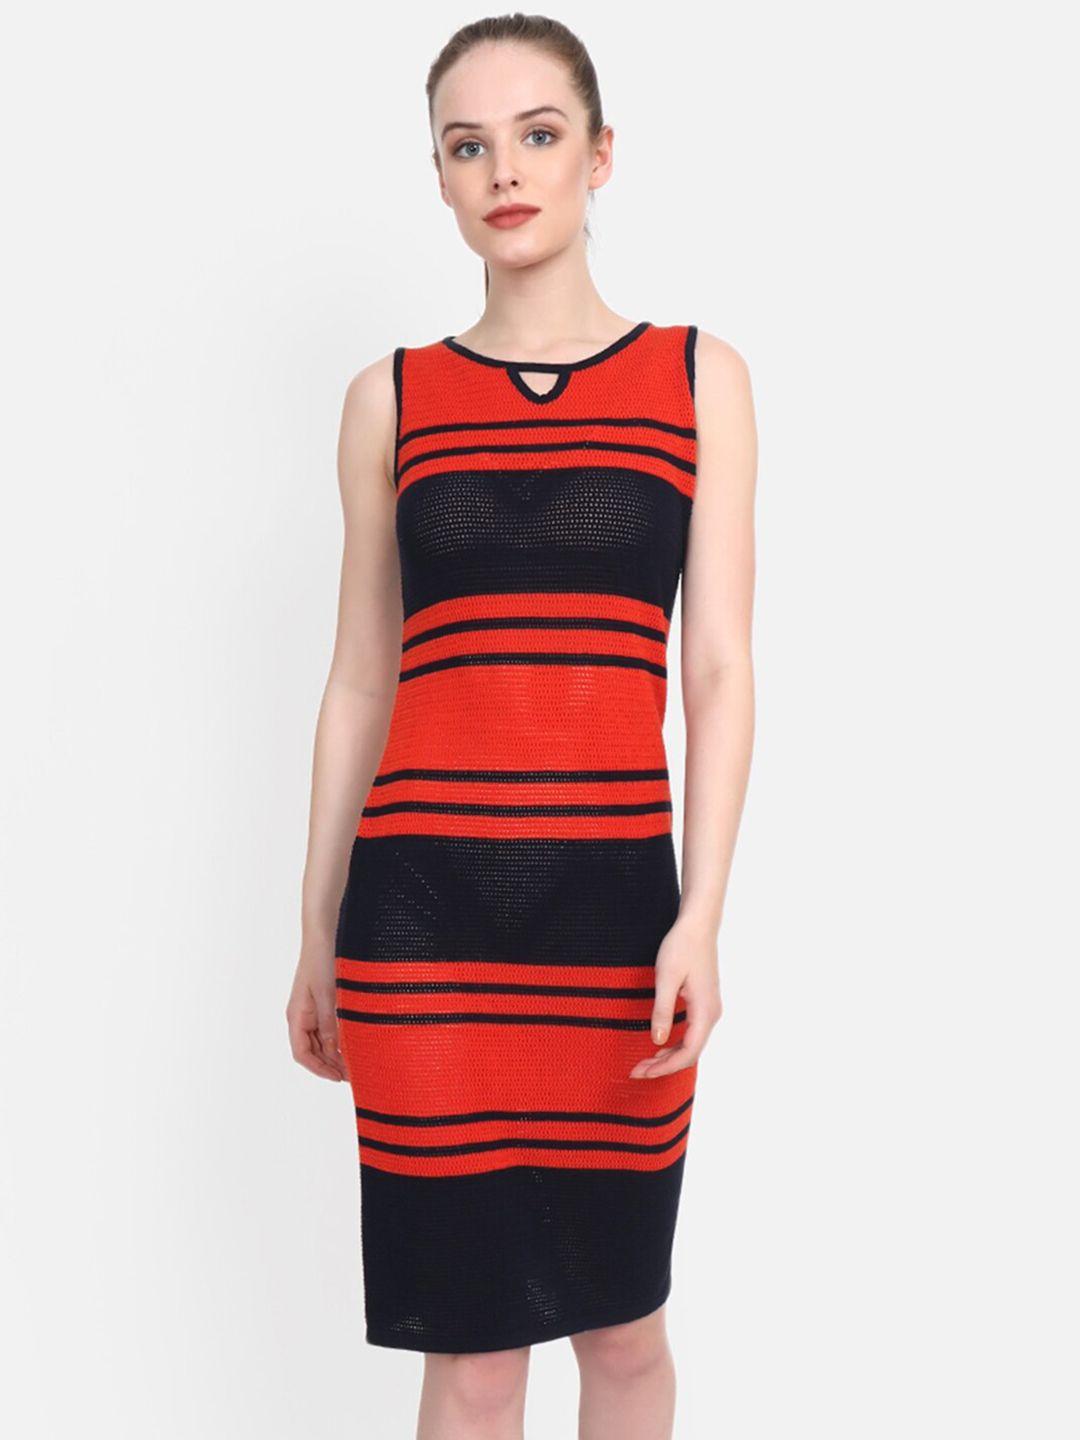 joe hazel orange & black striped cotton sheath dress